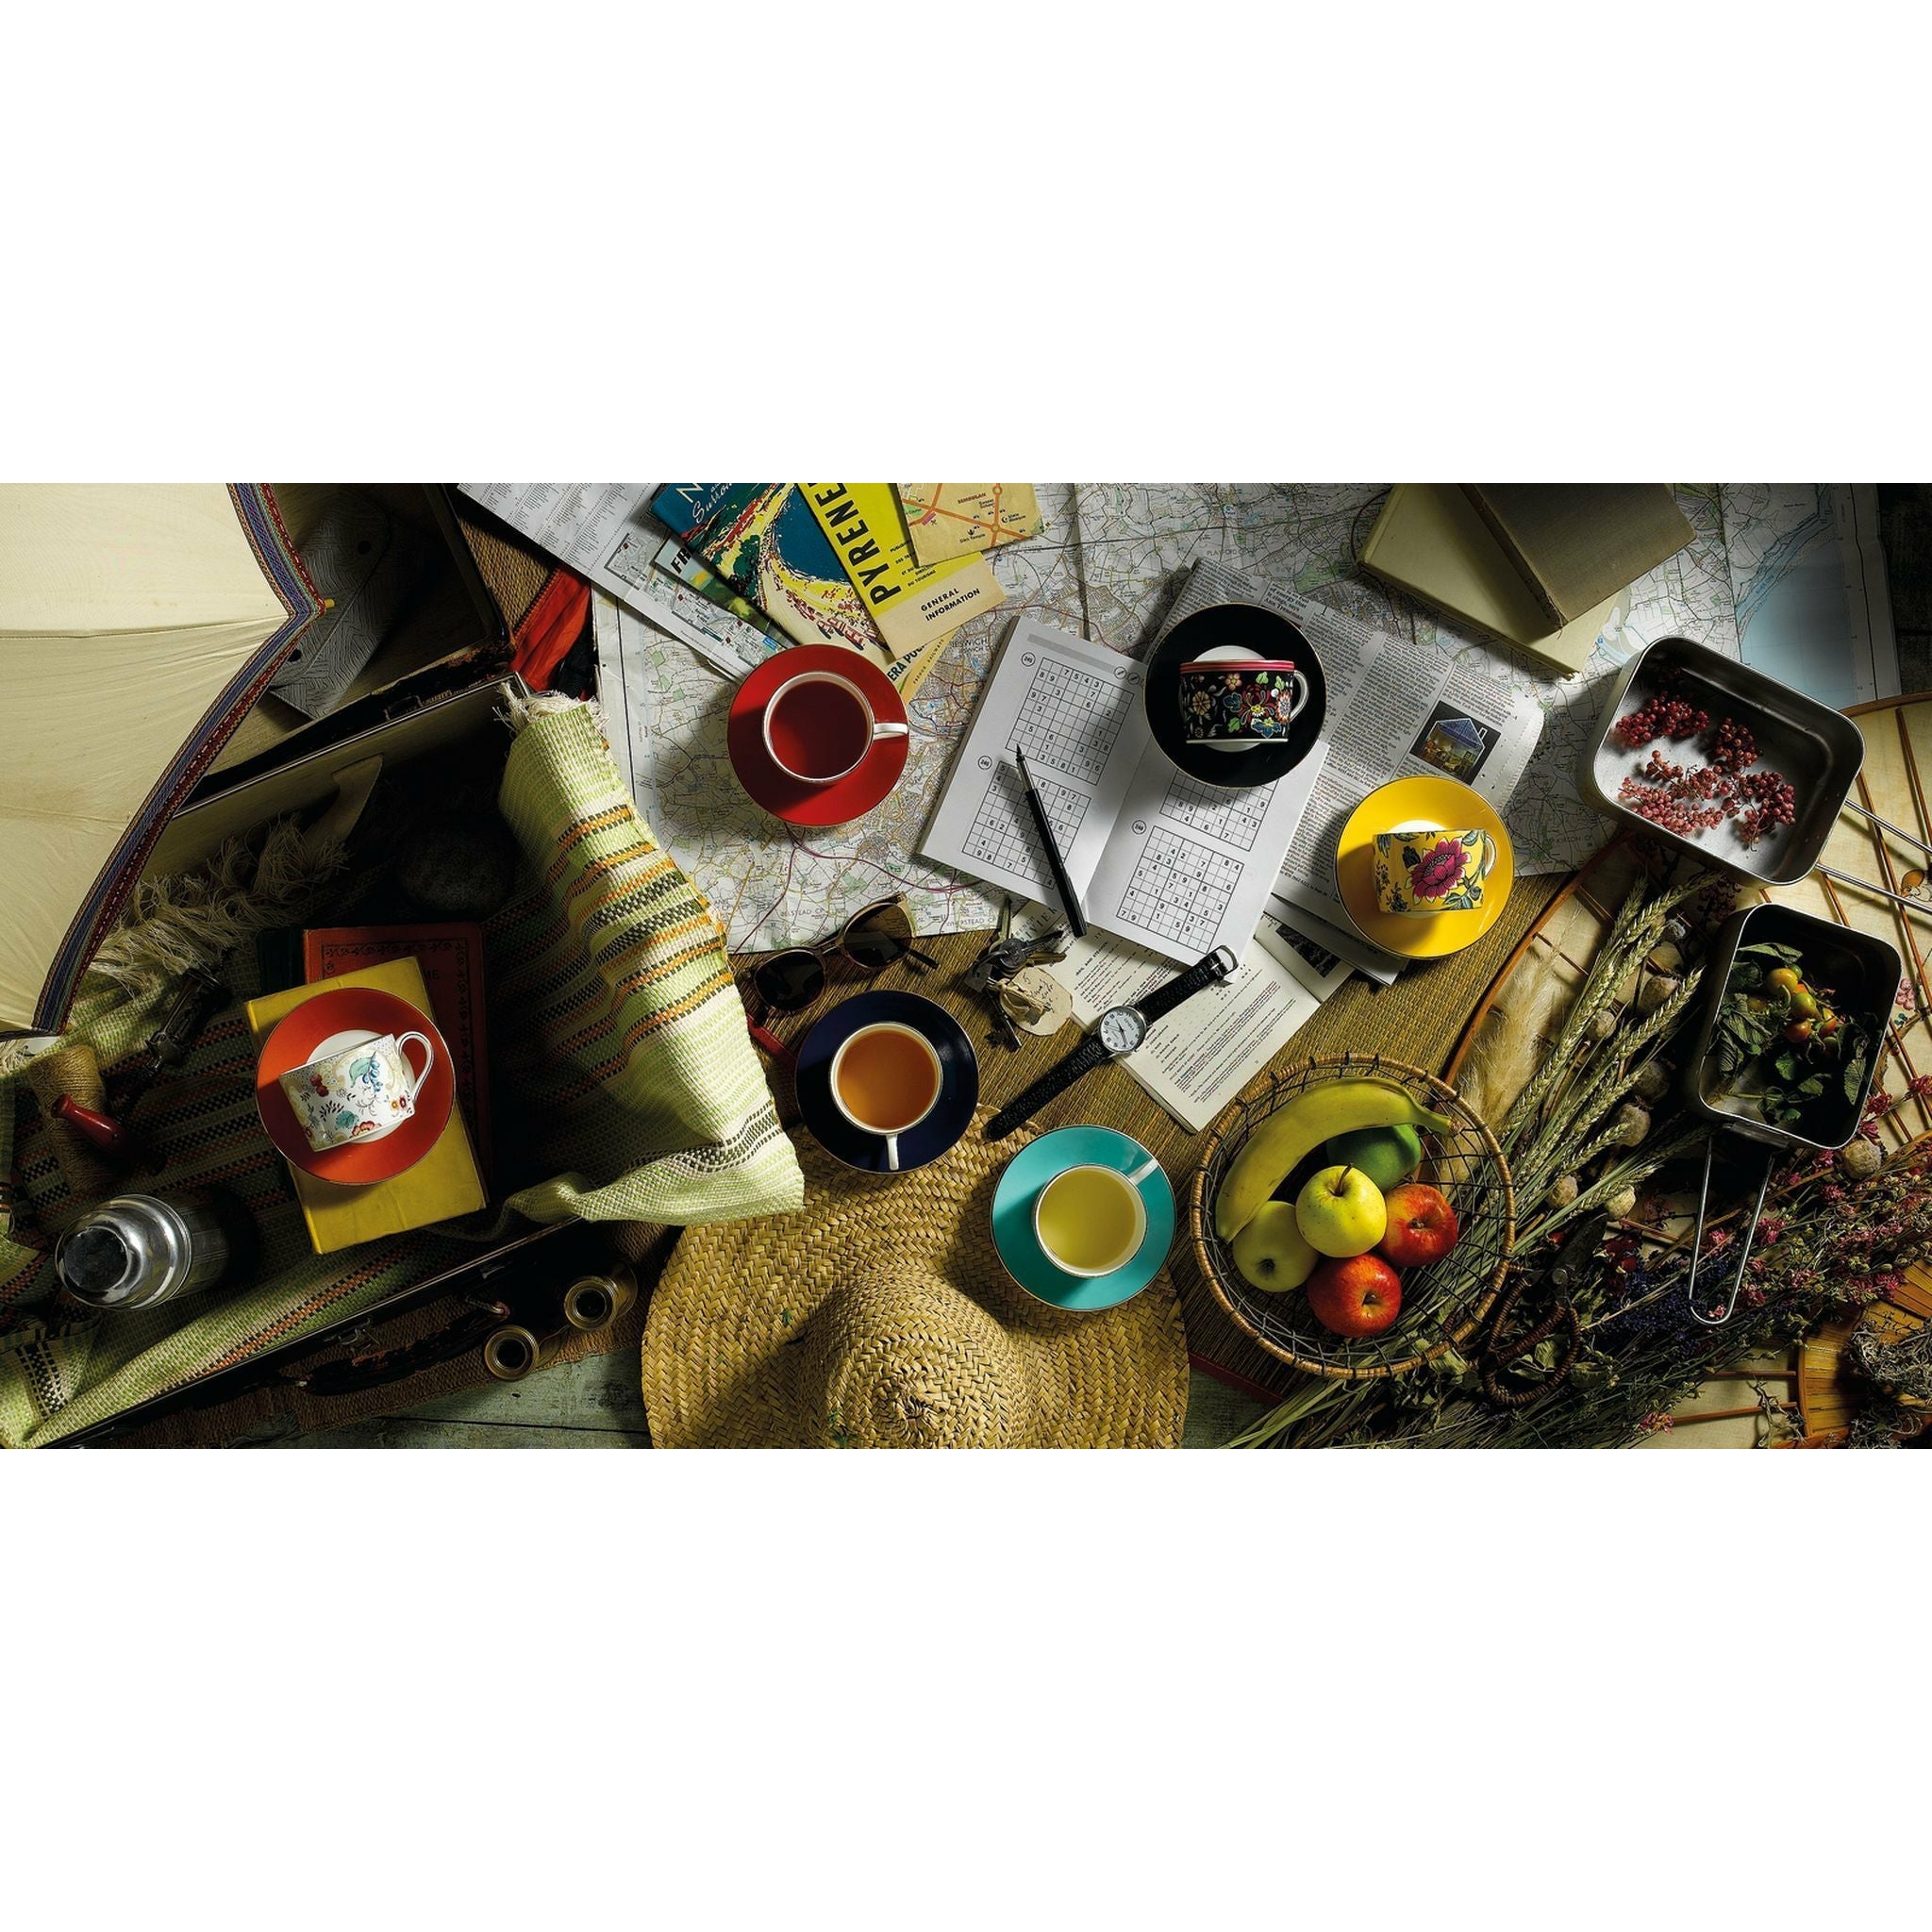 Wedgwood Wonderlust Sets Mixed Patterns Teacup & Saucer Set 4 Pcs Gift Box